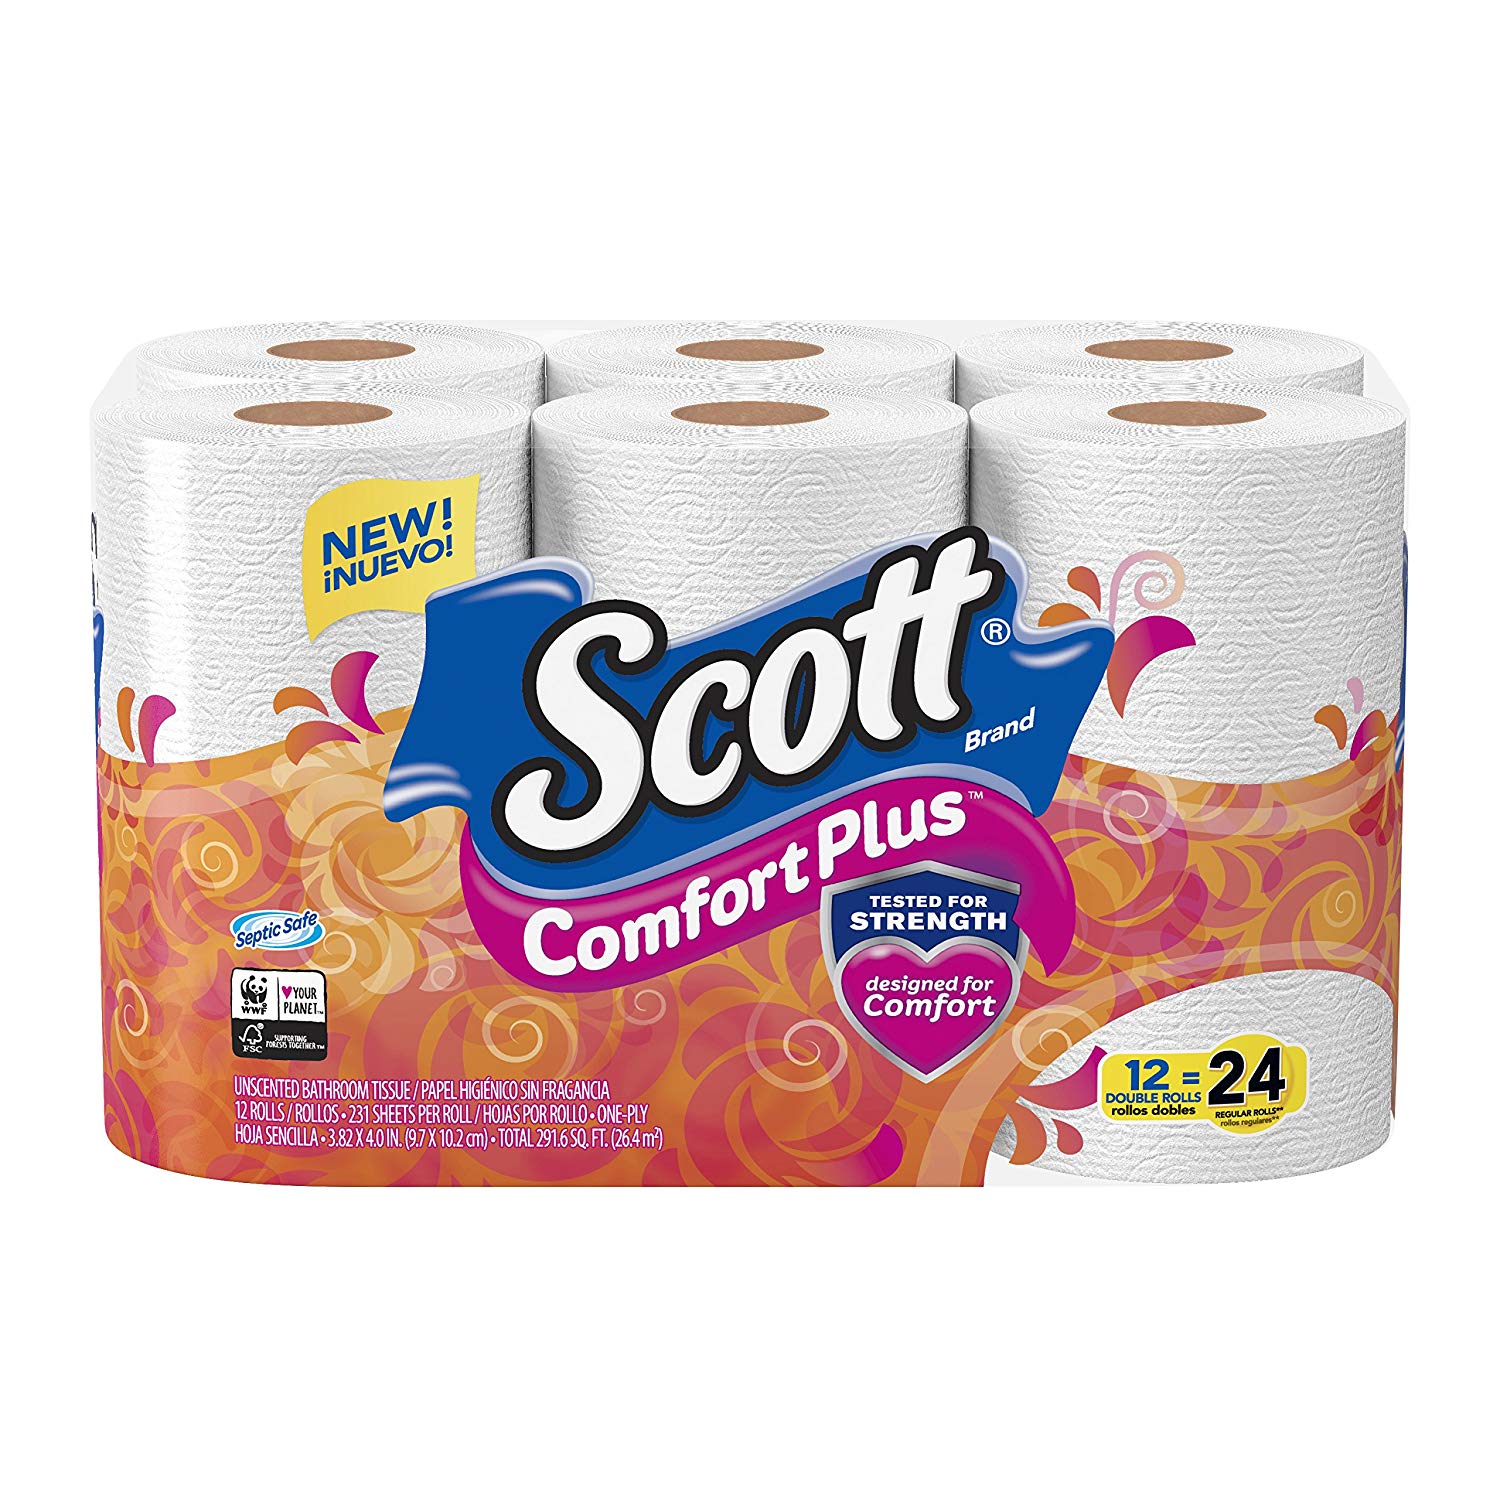 Scott Comfortplus Toilet Paper, 12 Double Rolls as low as ...